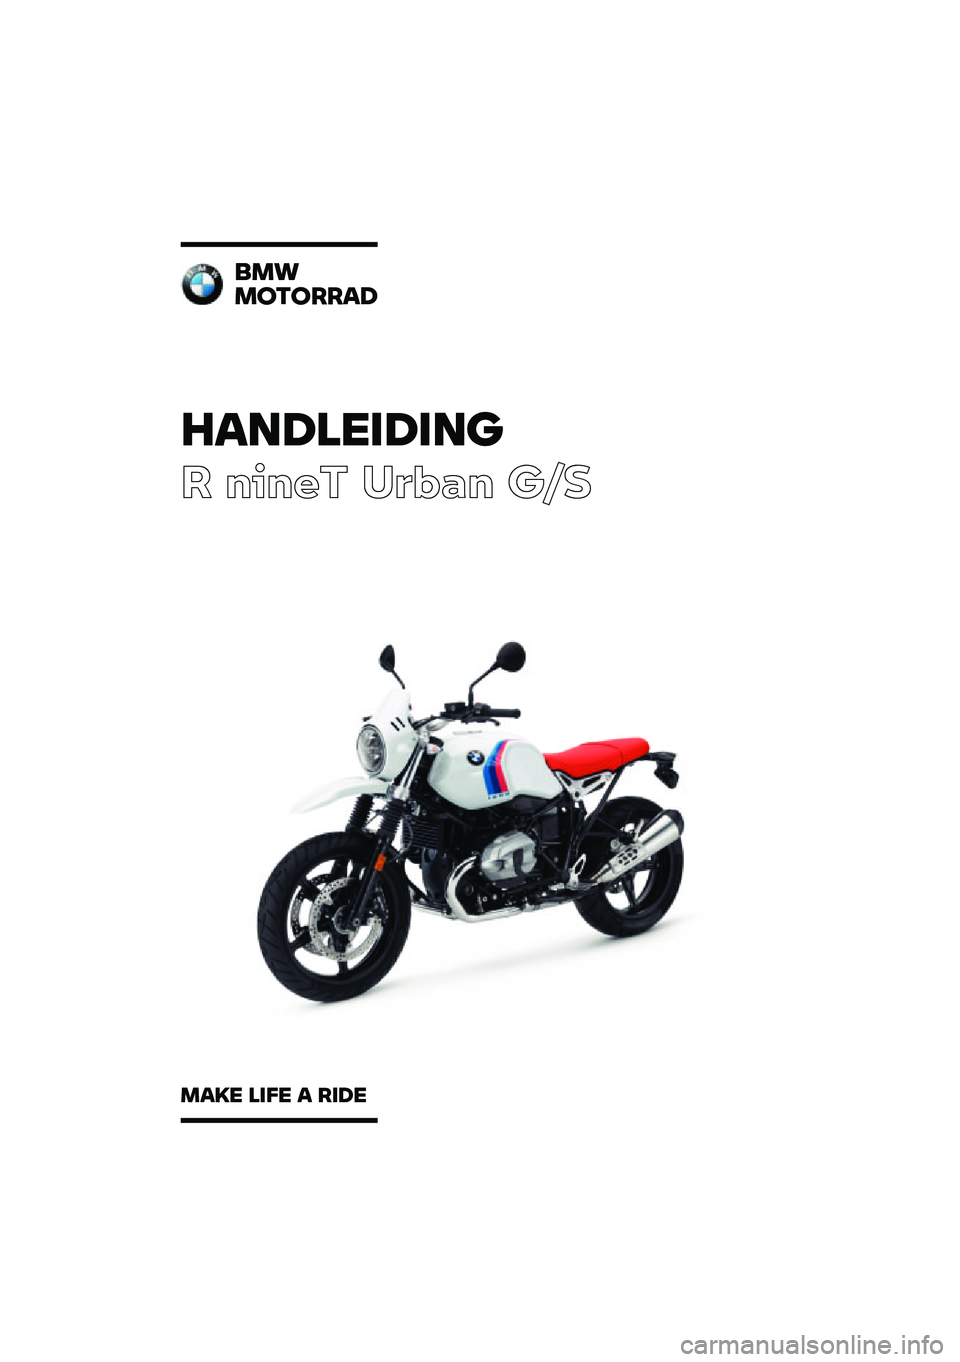 BMW MOTORRAD R NINE T URVAN G/S 2020  Handleiding (in Dutch) �������\b��\b��	
� ����� ��\b�	�
� ��\f�
�
��\f
��
��
����
���� ��\b�� � ��\b�� 